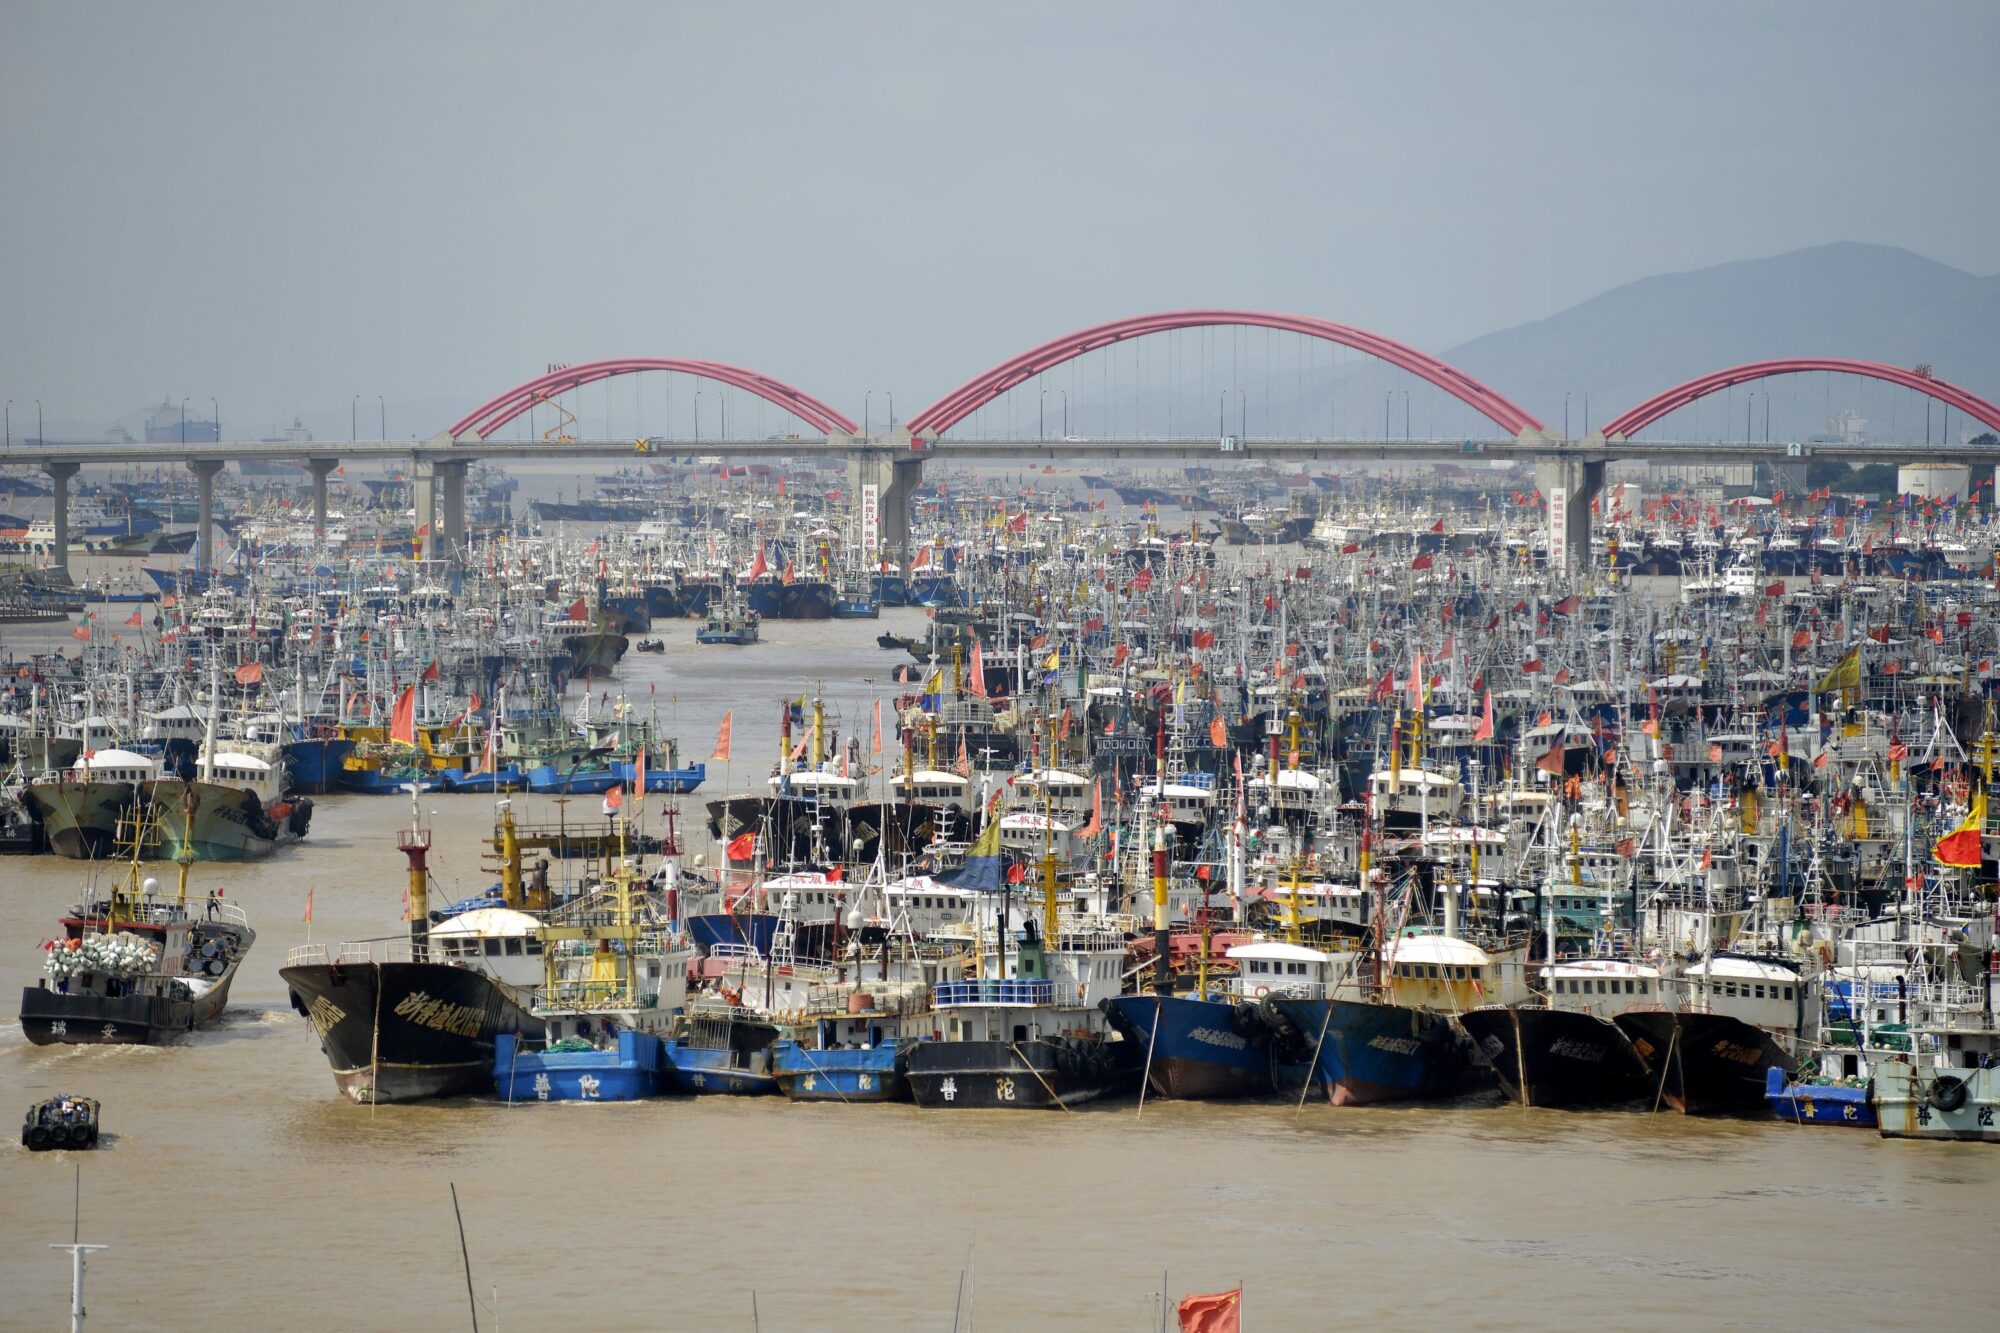 The busy port of Zhoushan, Zhejiang province